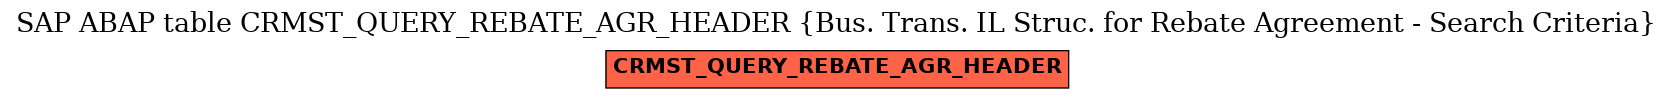 E-R Diagram for table CRMST_QUERY_REBATE_AGR_HEADER (Bus. Trans. IL Struc. for Rebate Agreement - Search Criteria)